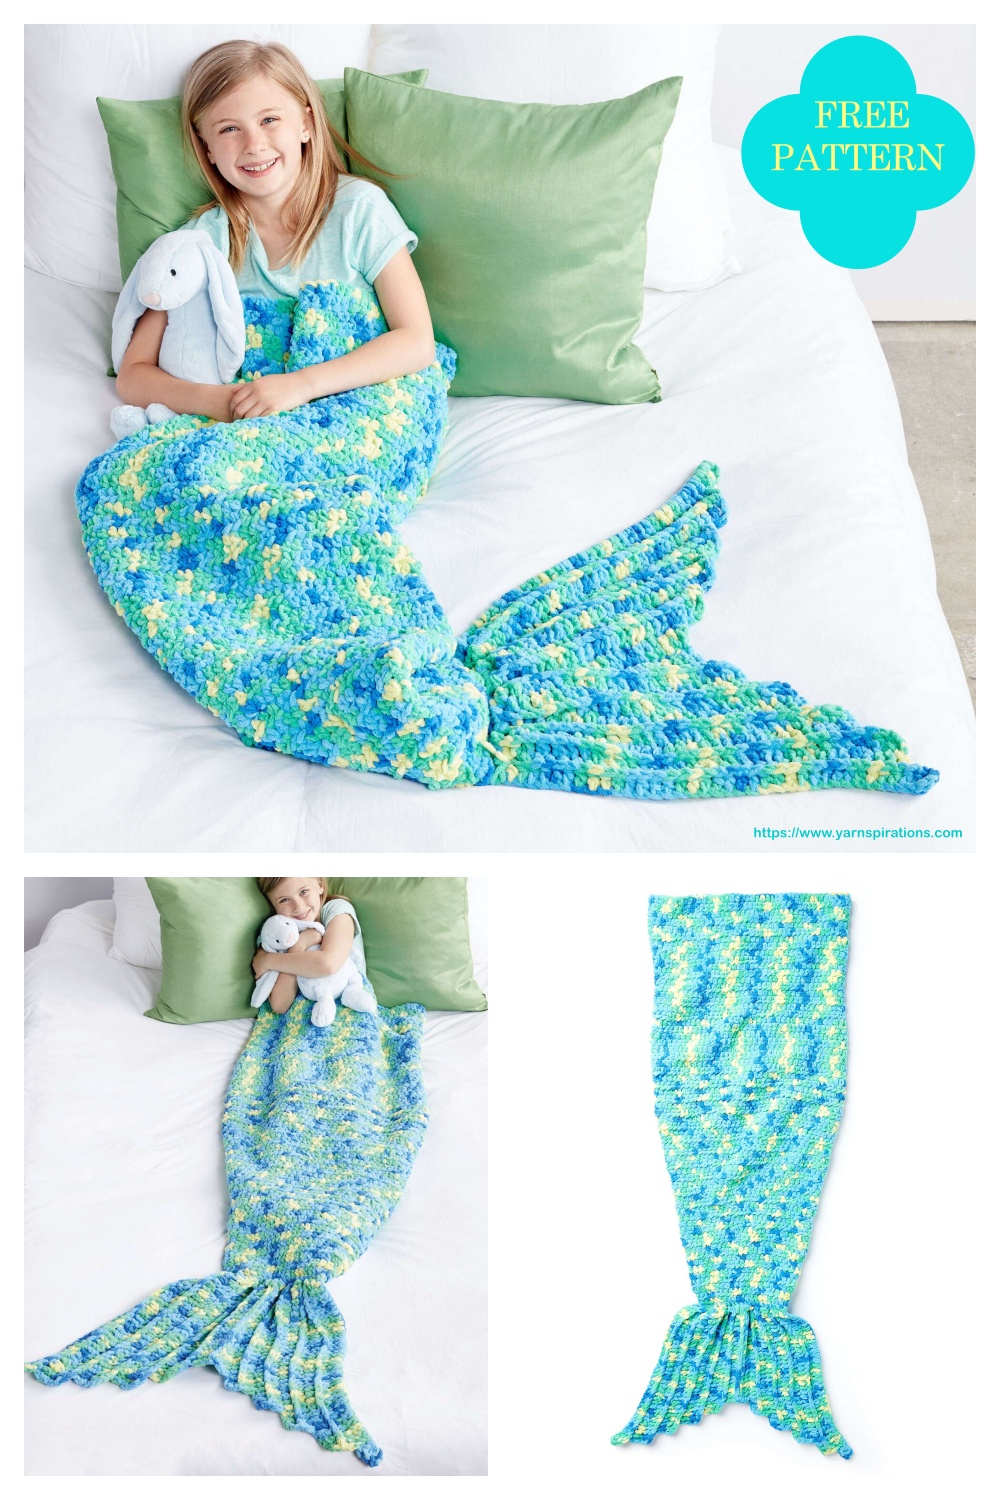 8 Mermaid Tail Blanket Crochet Patterns - FREE